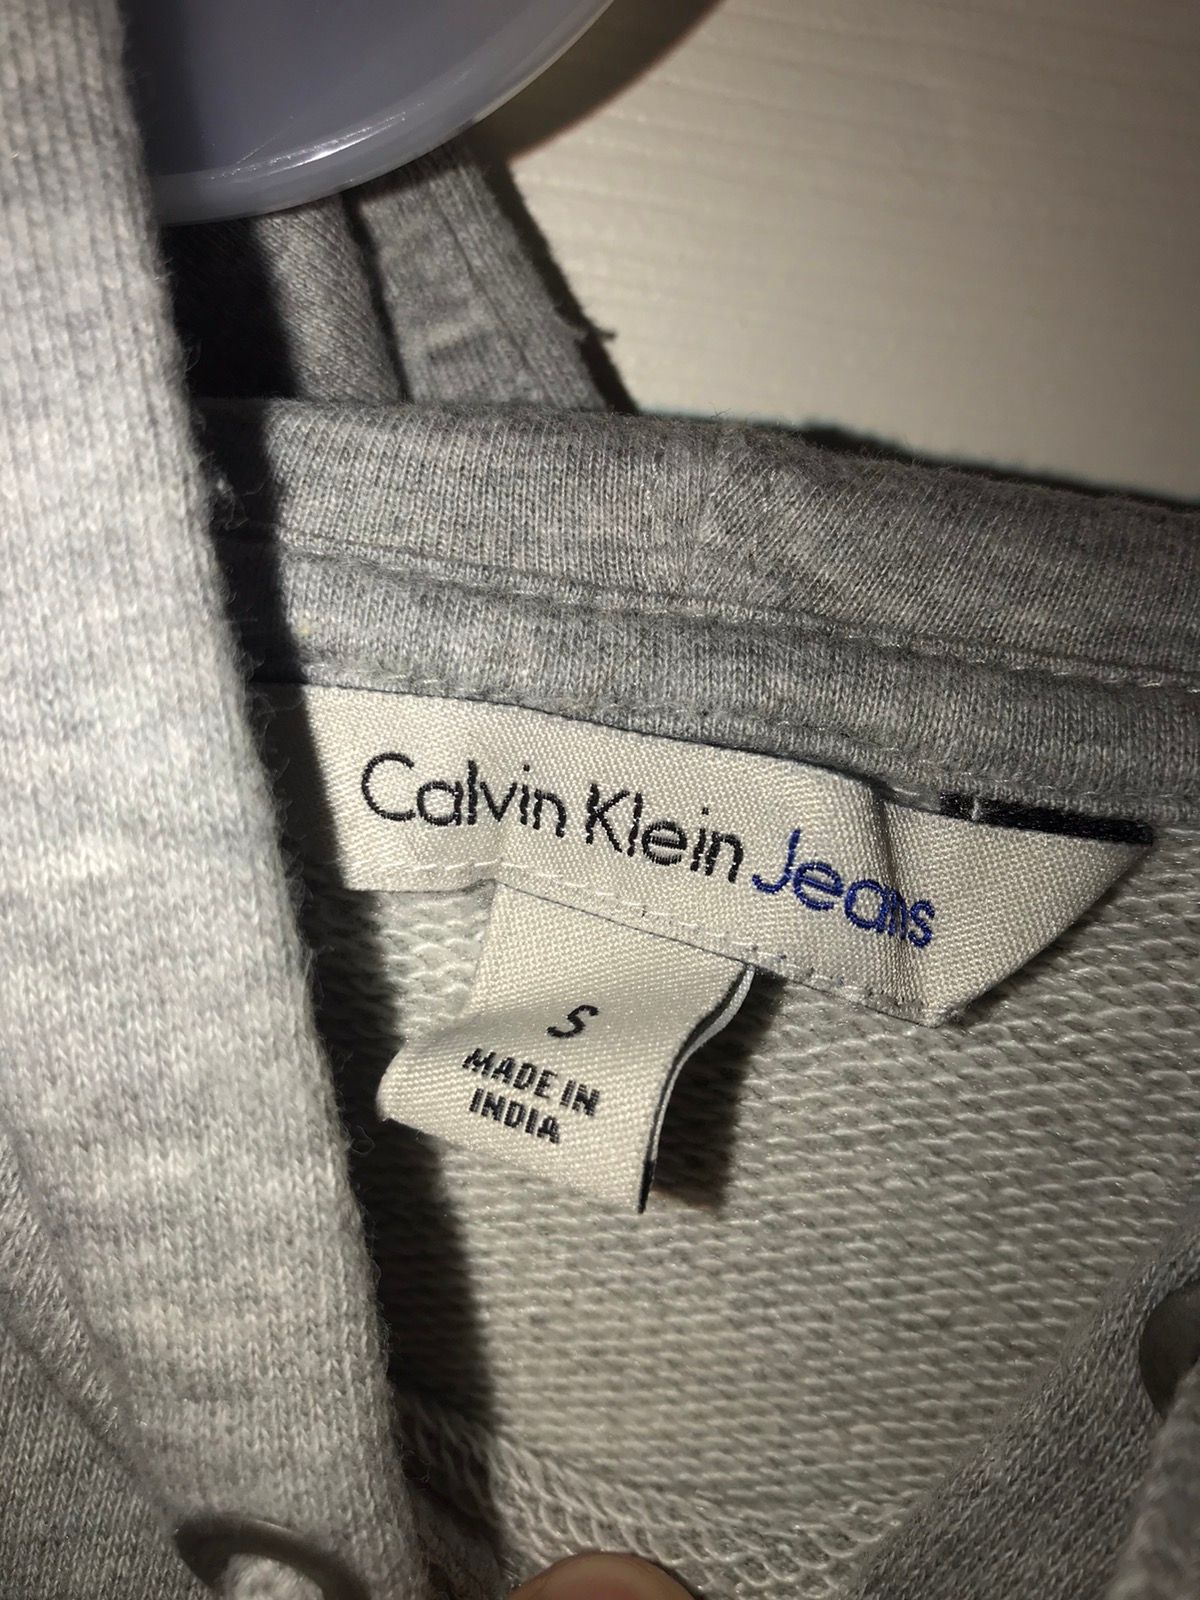 Calvin Klein Calvin Klein Jeans Hoodie Size S Size US S / EU 44-46 / 1 - 3 Preview